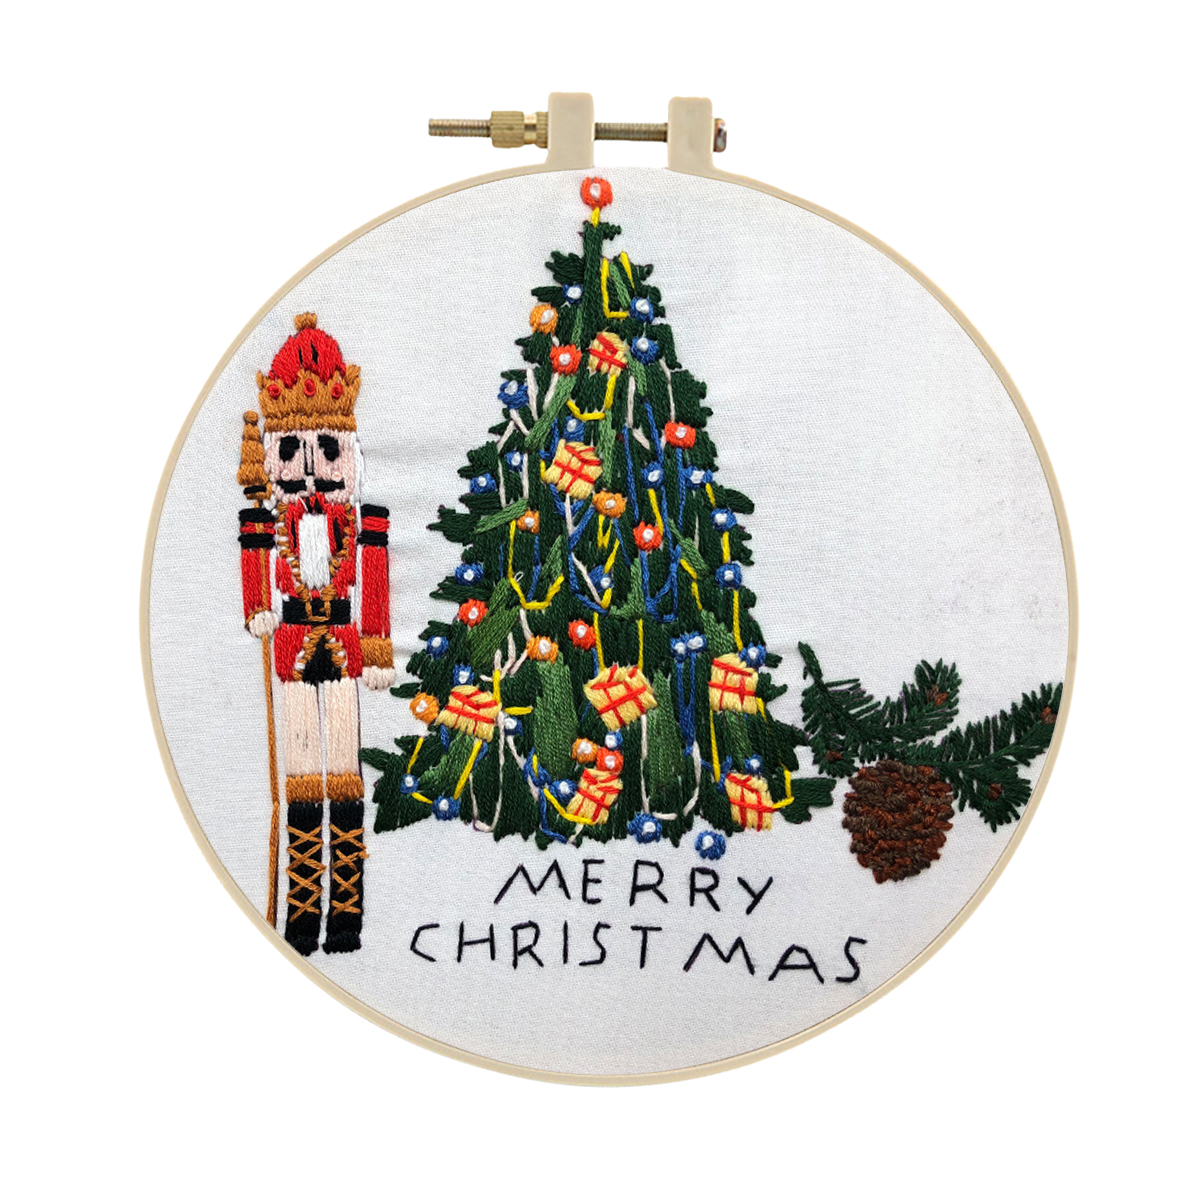 DIY Handmade Christmas Embroidery Kit Craft Cross Stitch Kits Beginner - Christmas Trees Pattern